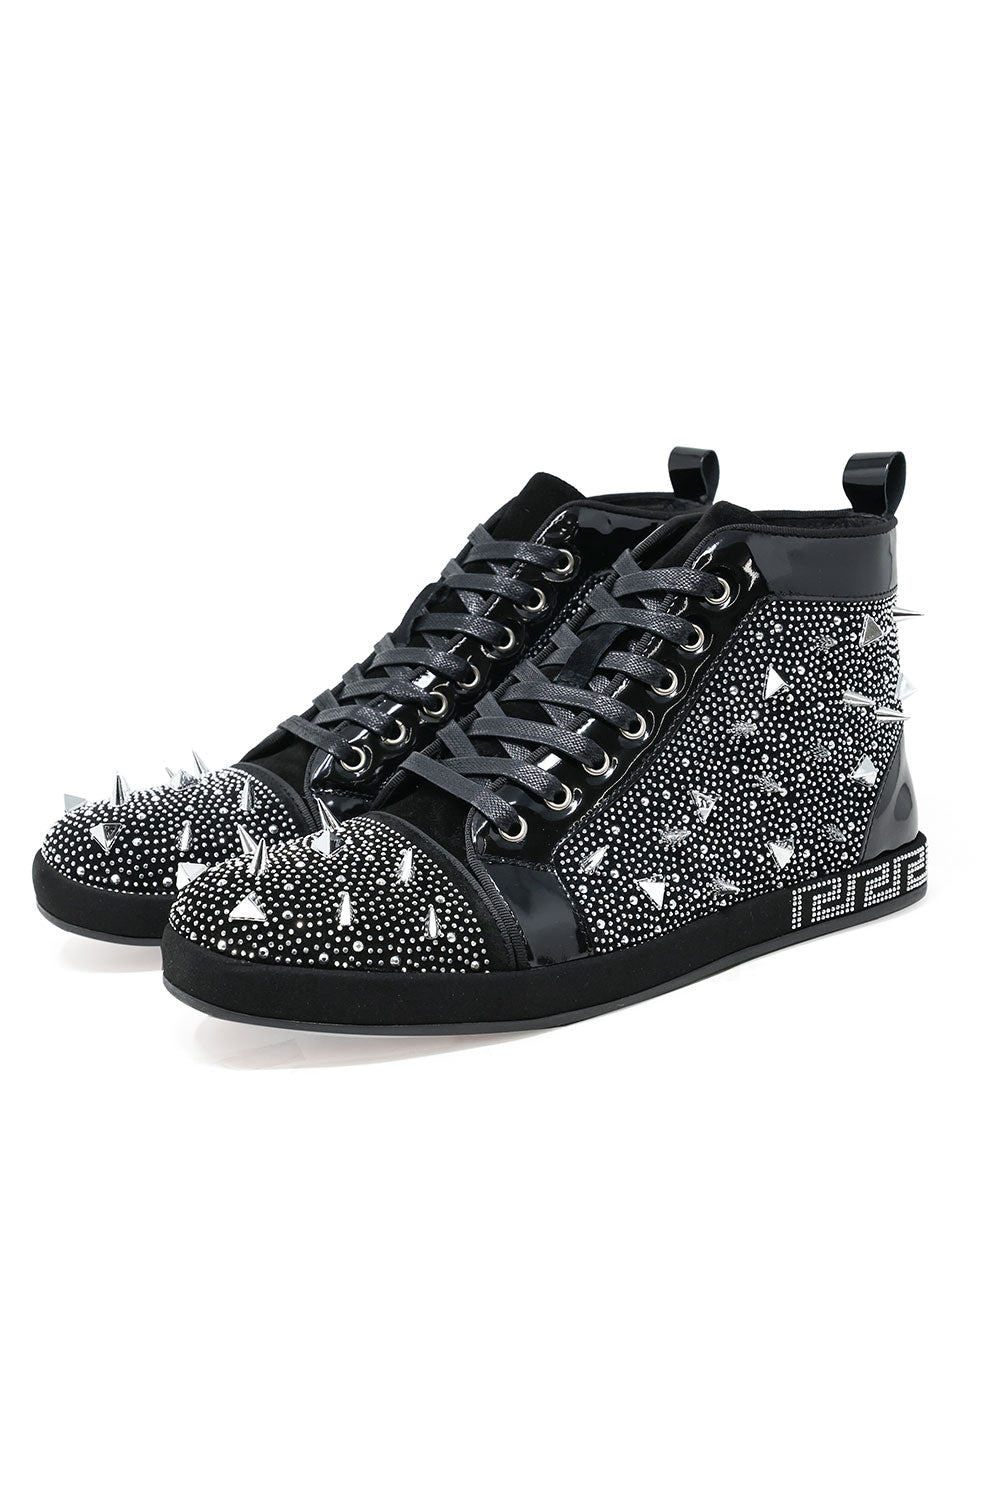 Barabas men's rhinestone spike Greek pattern high-top sneakers SH721 Black silver